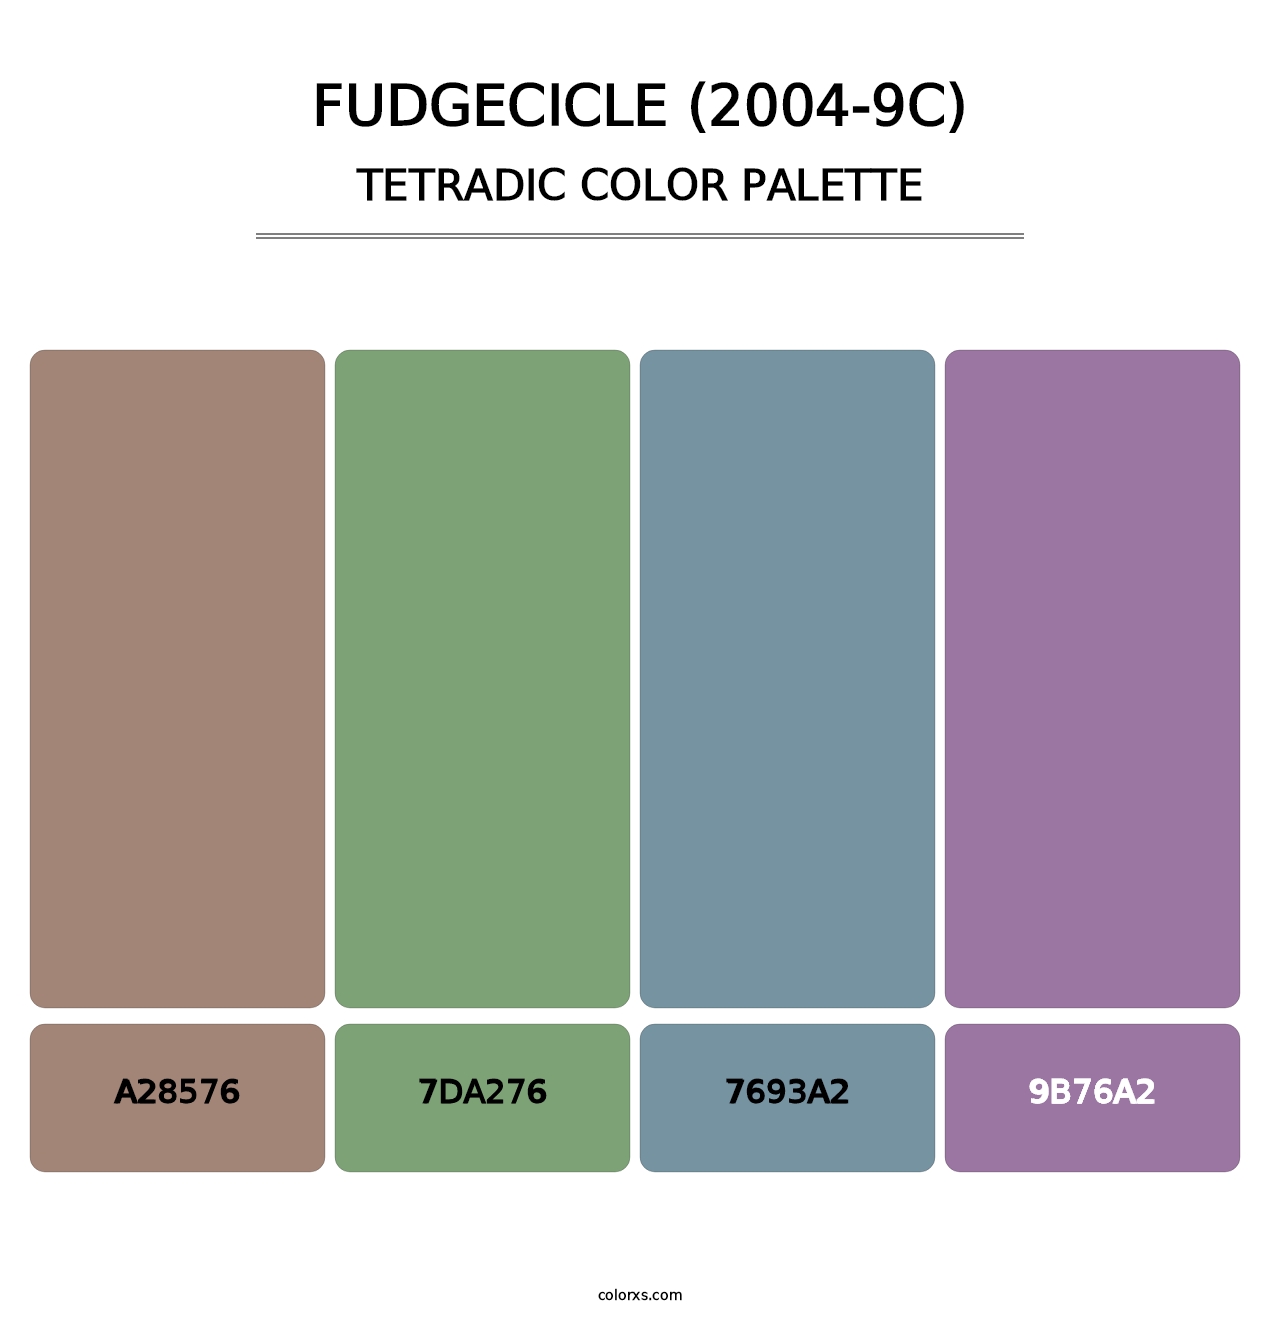 Fudgecicle (2004-9C) - Tetradic Color Palette